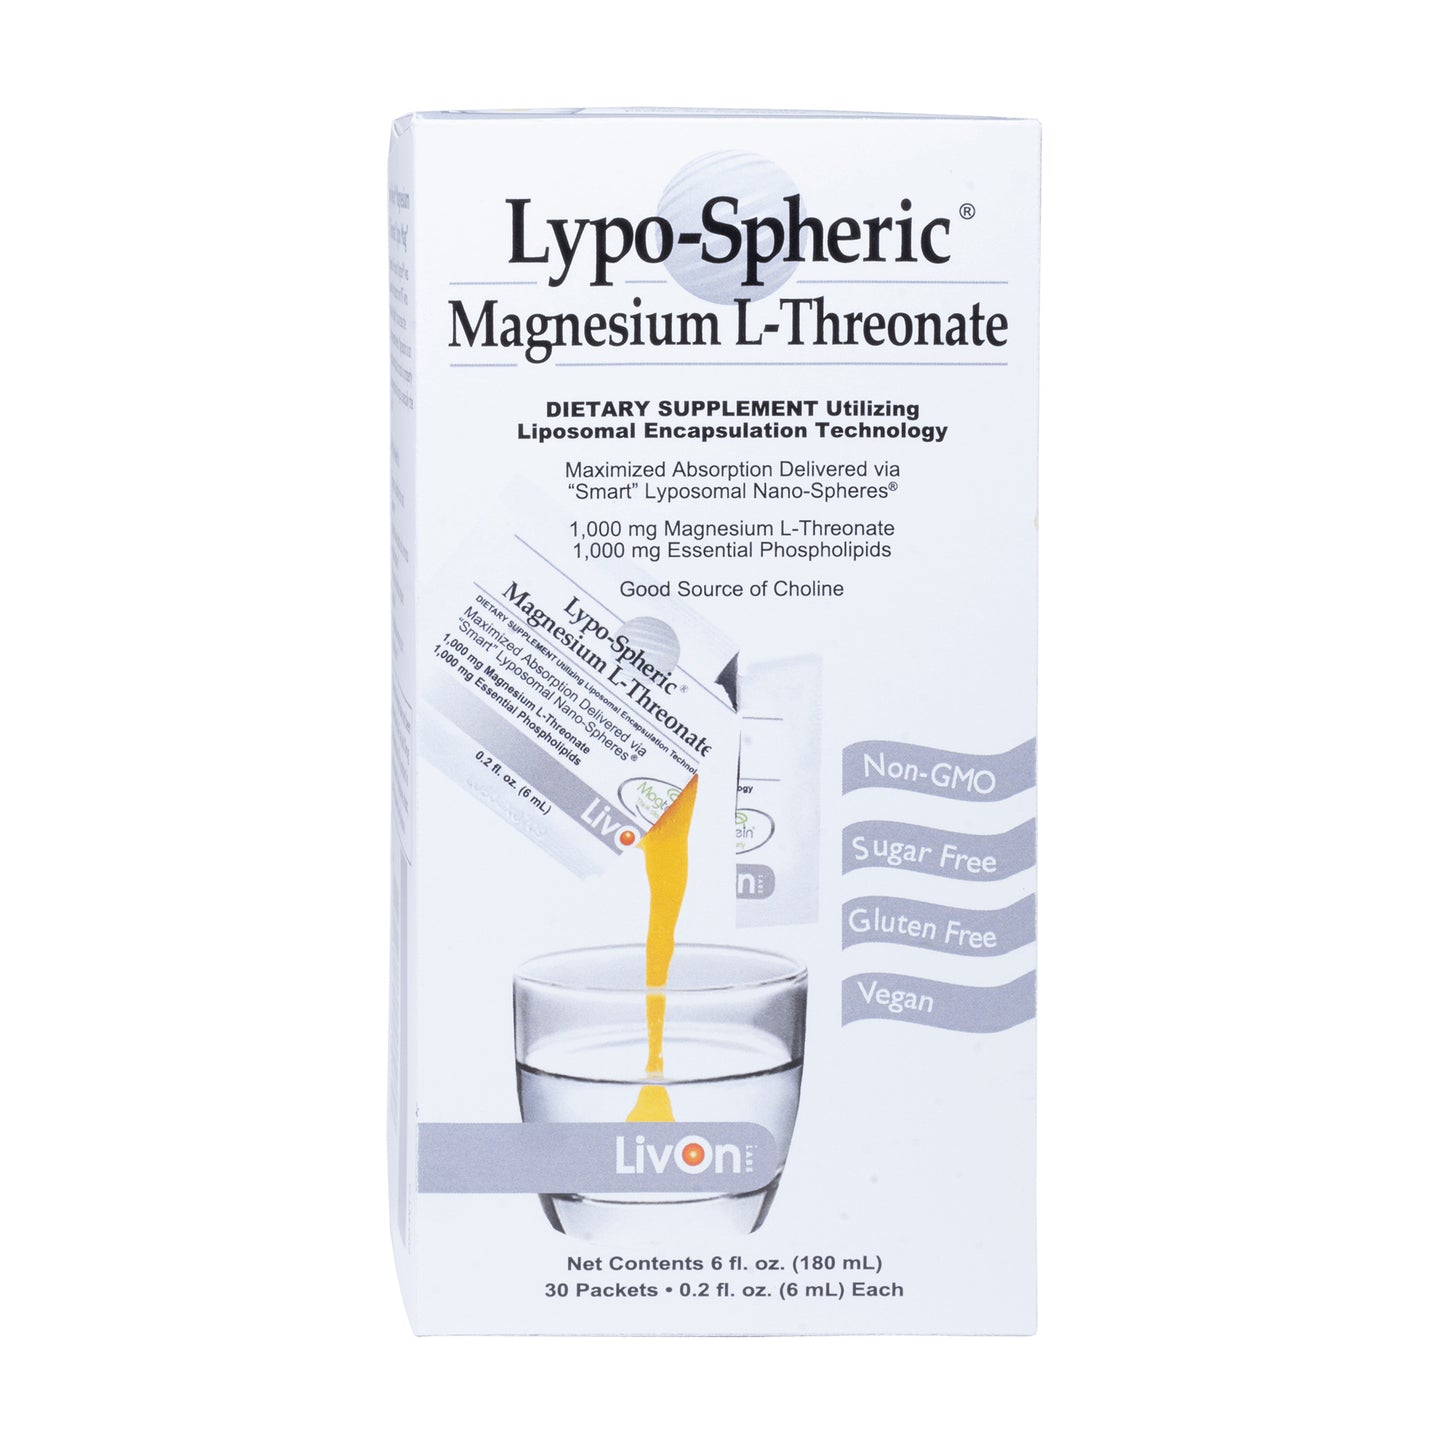 LivOn LABORATORIES LYPO-SPHERIC MAGNESIUM L-THREONATE  - 1000 mg - 30 Packets